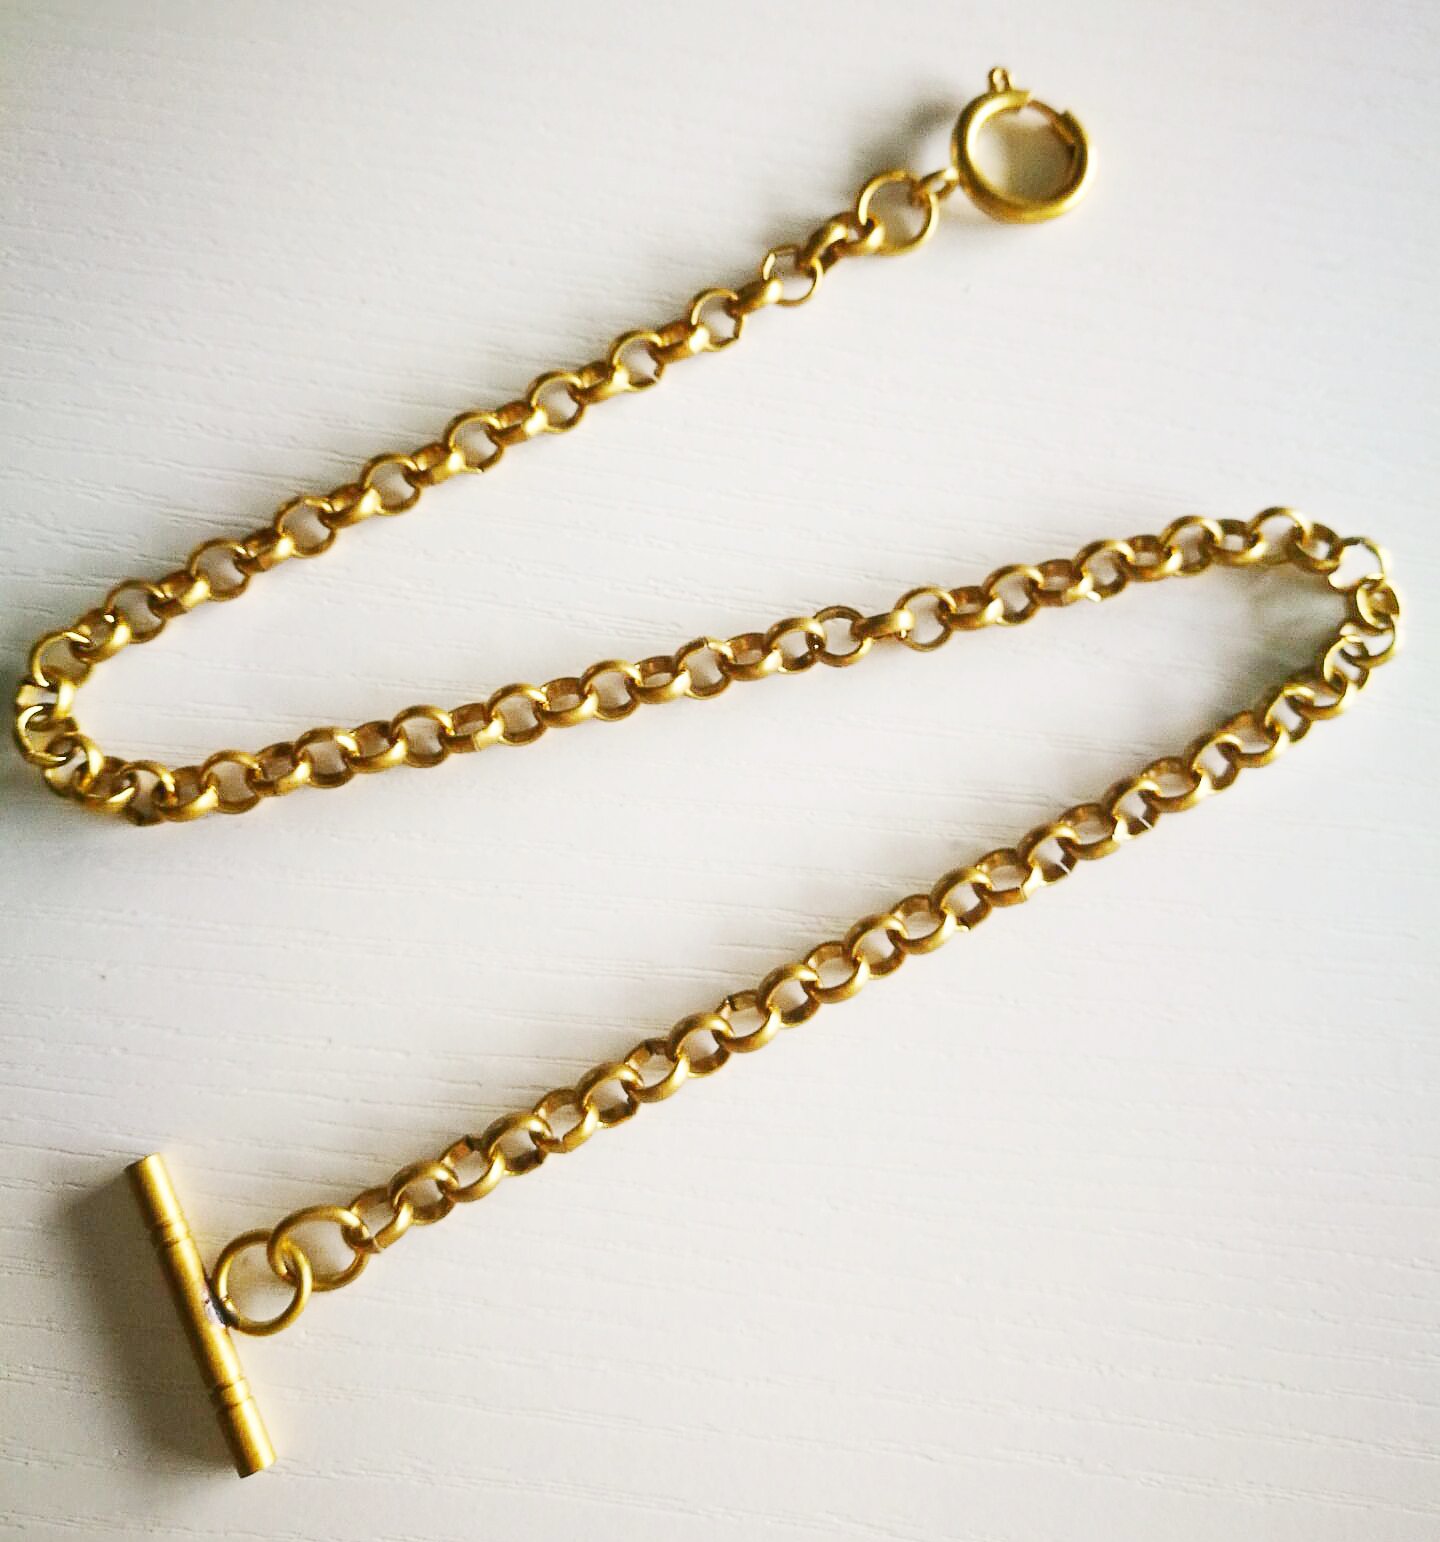 ManChDa Pocket Watch Albert Vest Chain with T Bar - Pure Copper Watch Chain Link 14 inch Golden Gorgeous